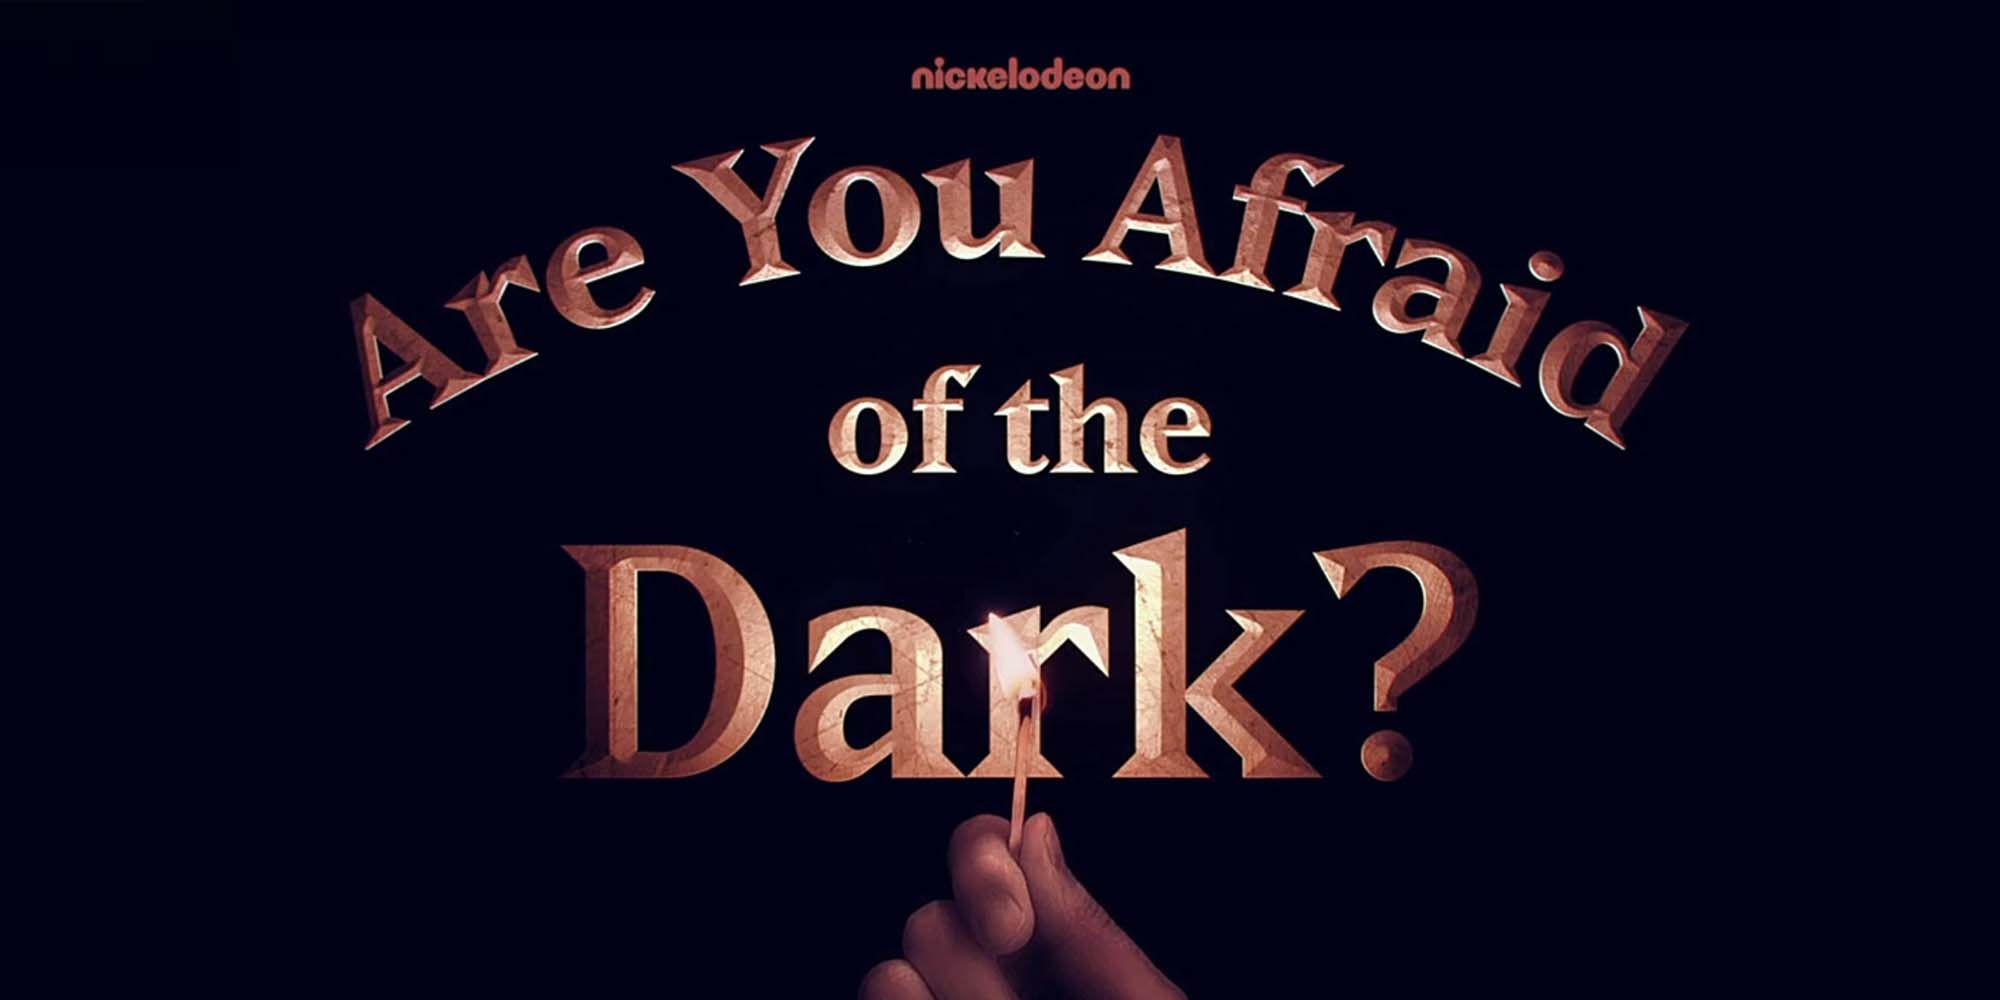 Nickelodeon's Are You Afraid of the Dark? logo.